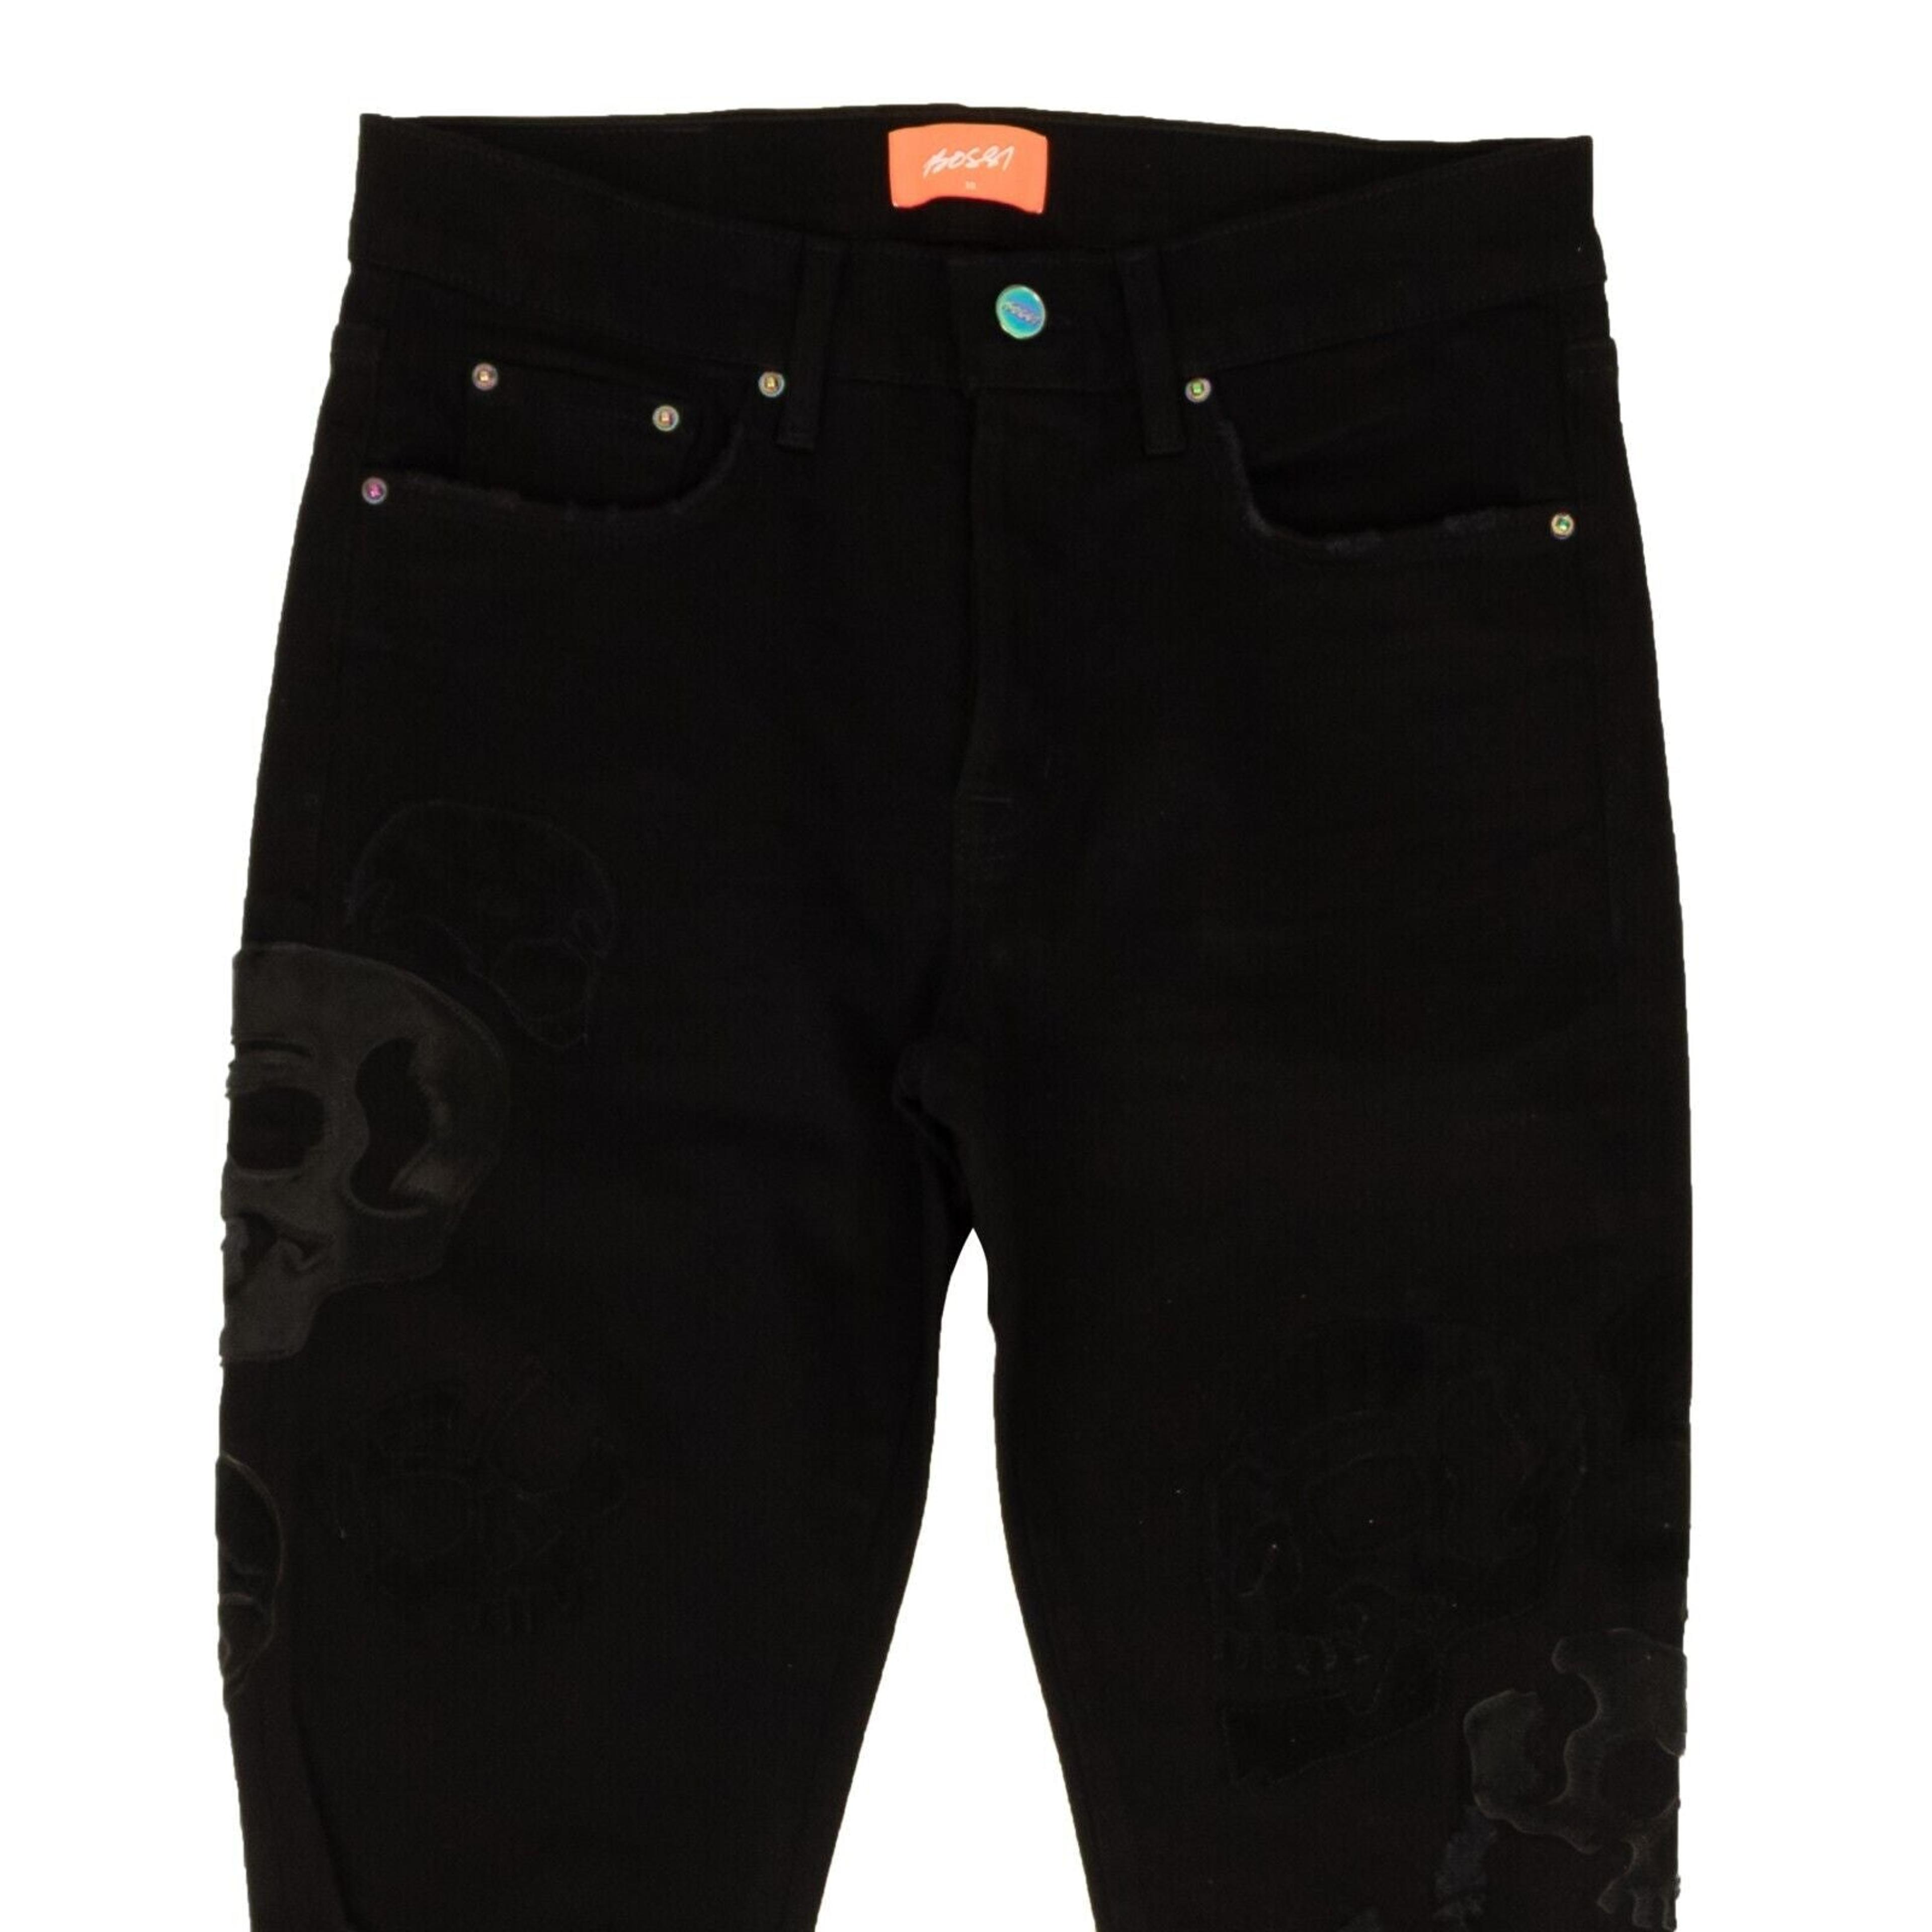 Alternate View 1 of Bossi Skull Jeans - Black